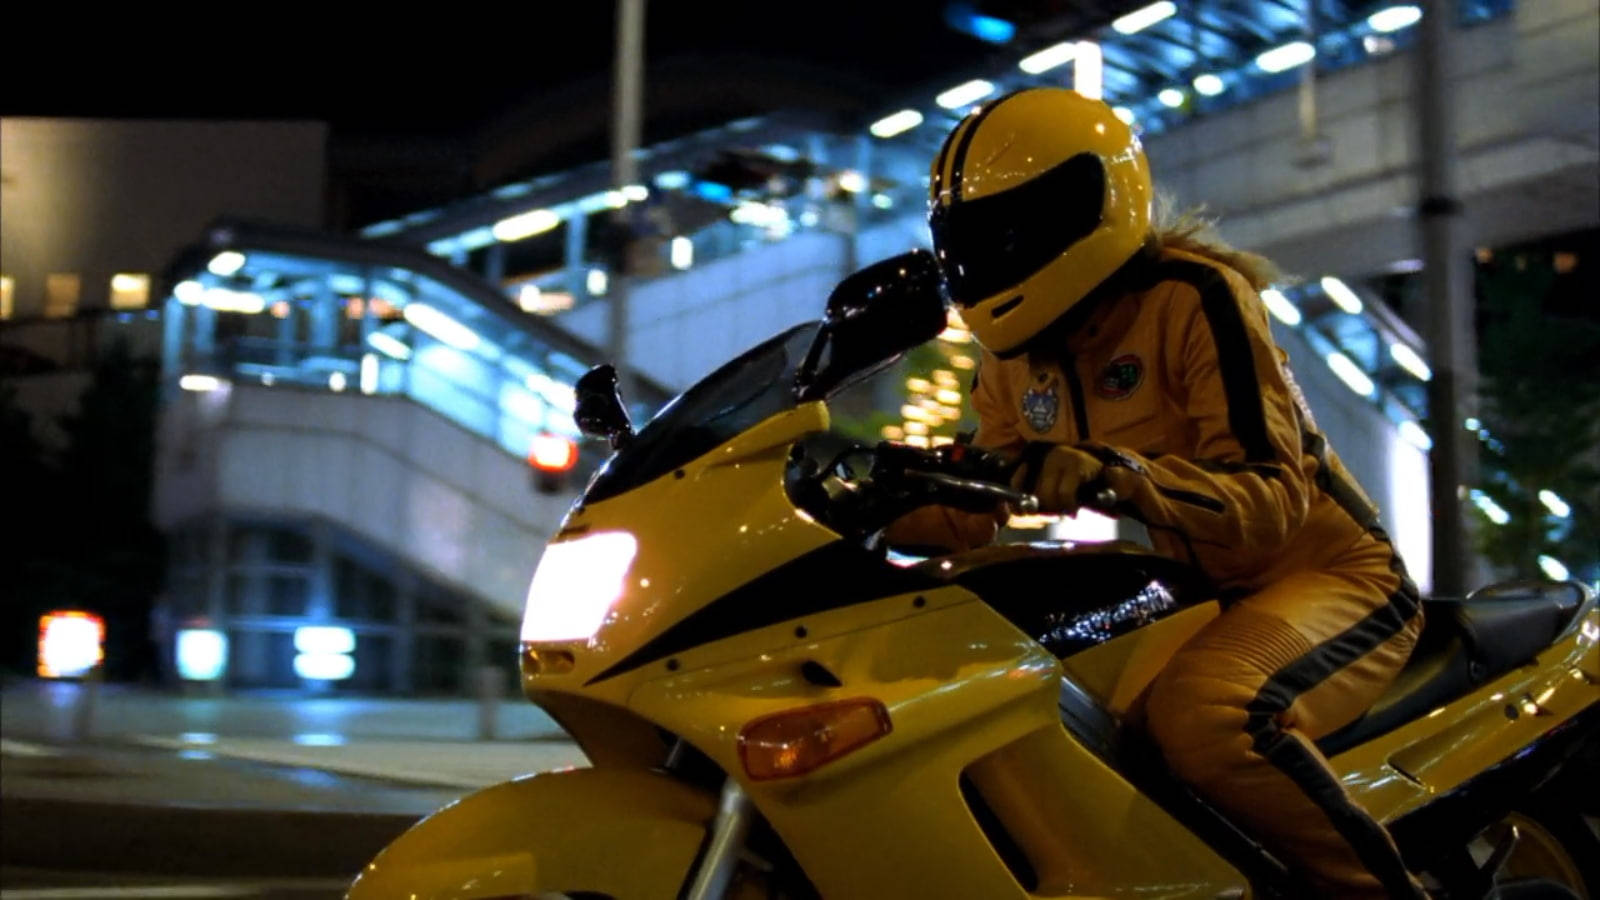 Kill Bill Yellow Motorcycle